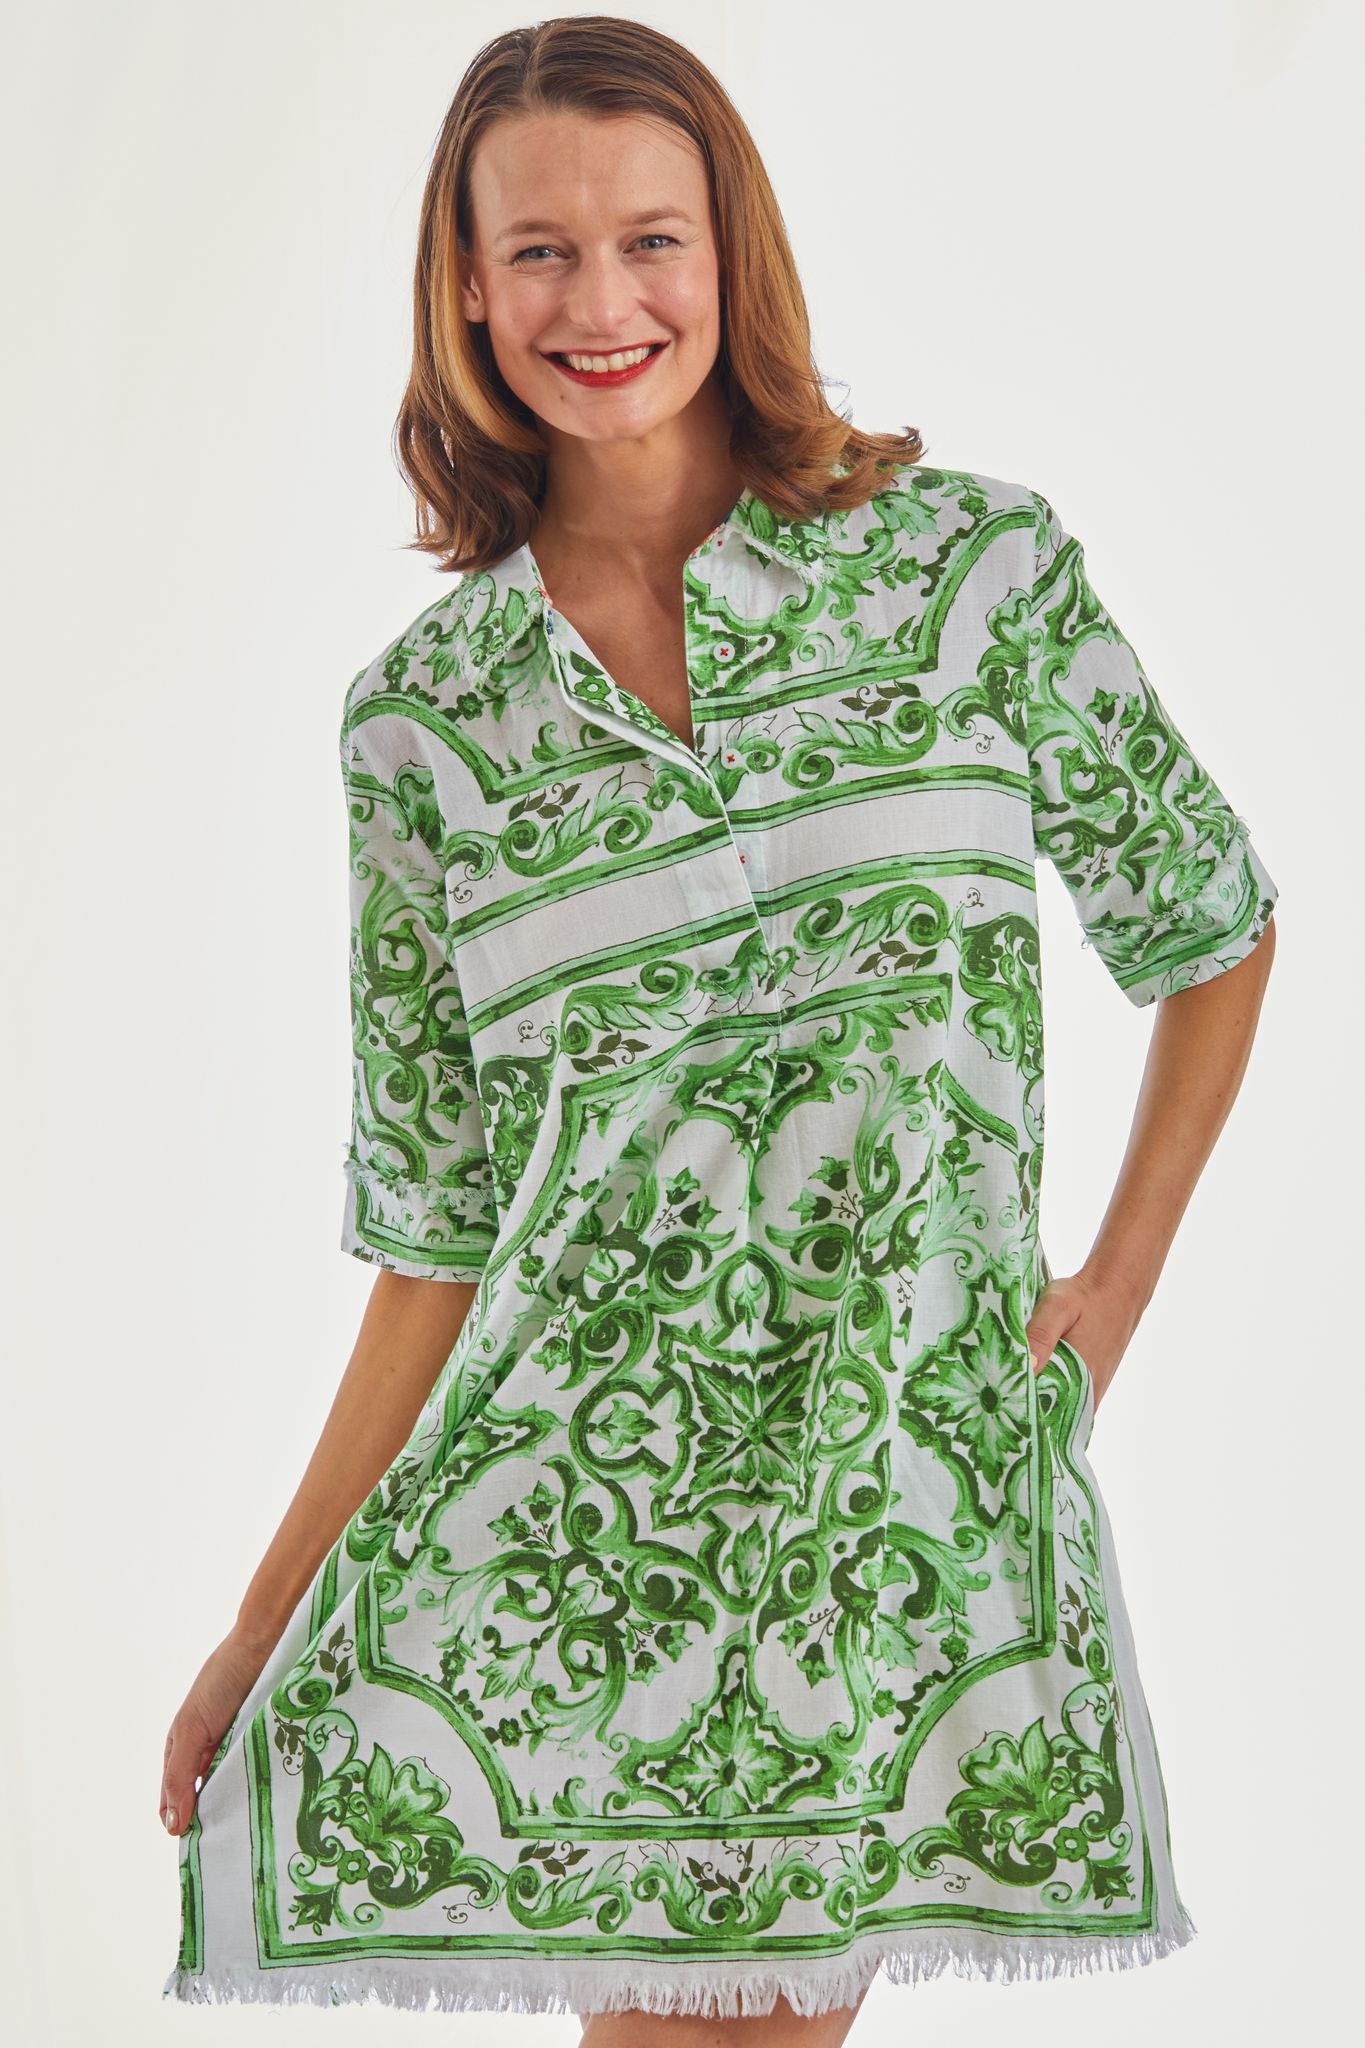 Chatham Dress Green White Tile Print